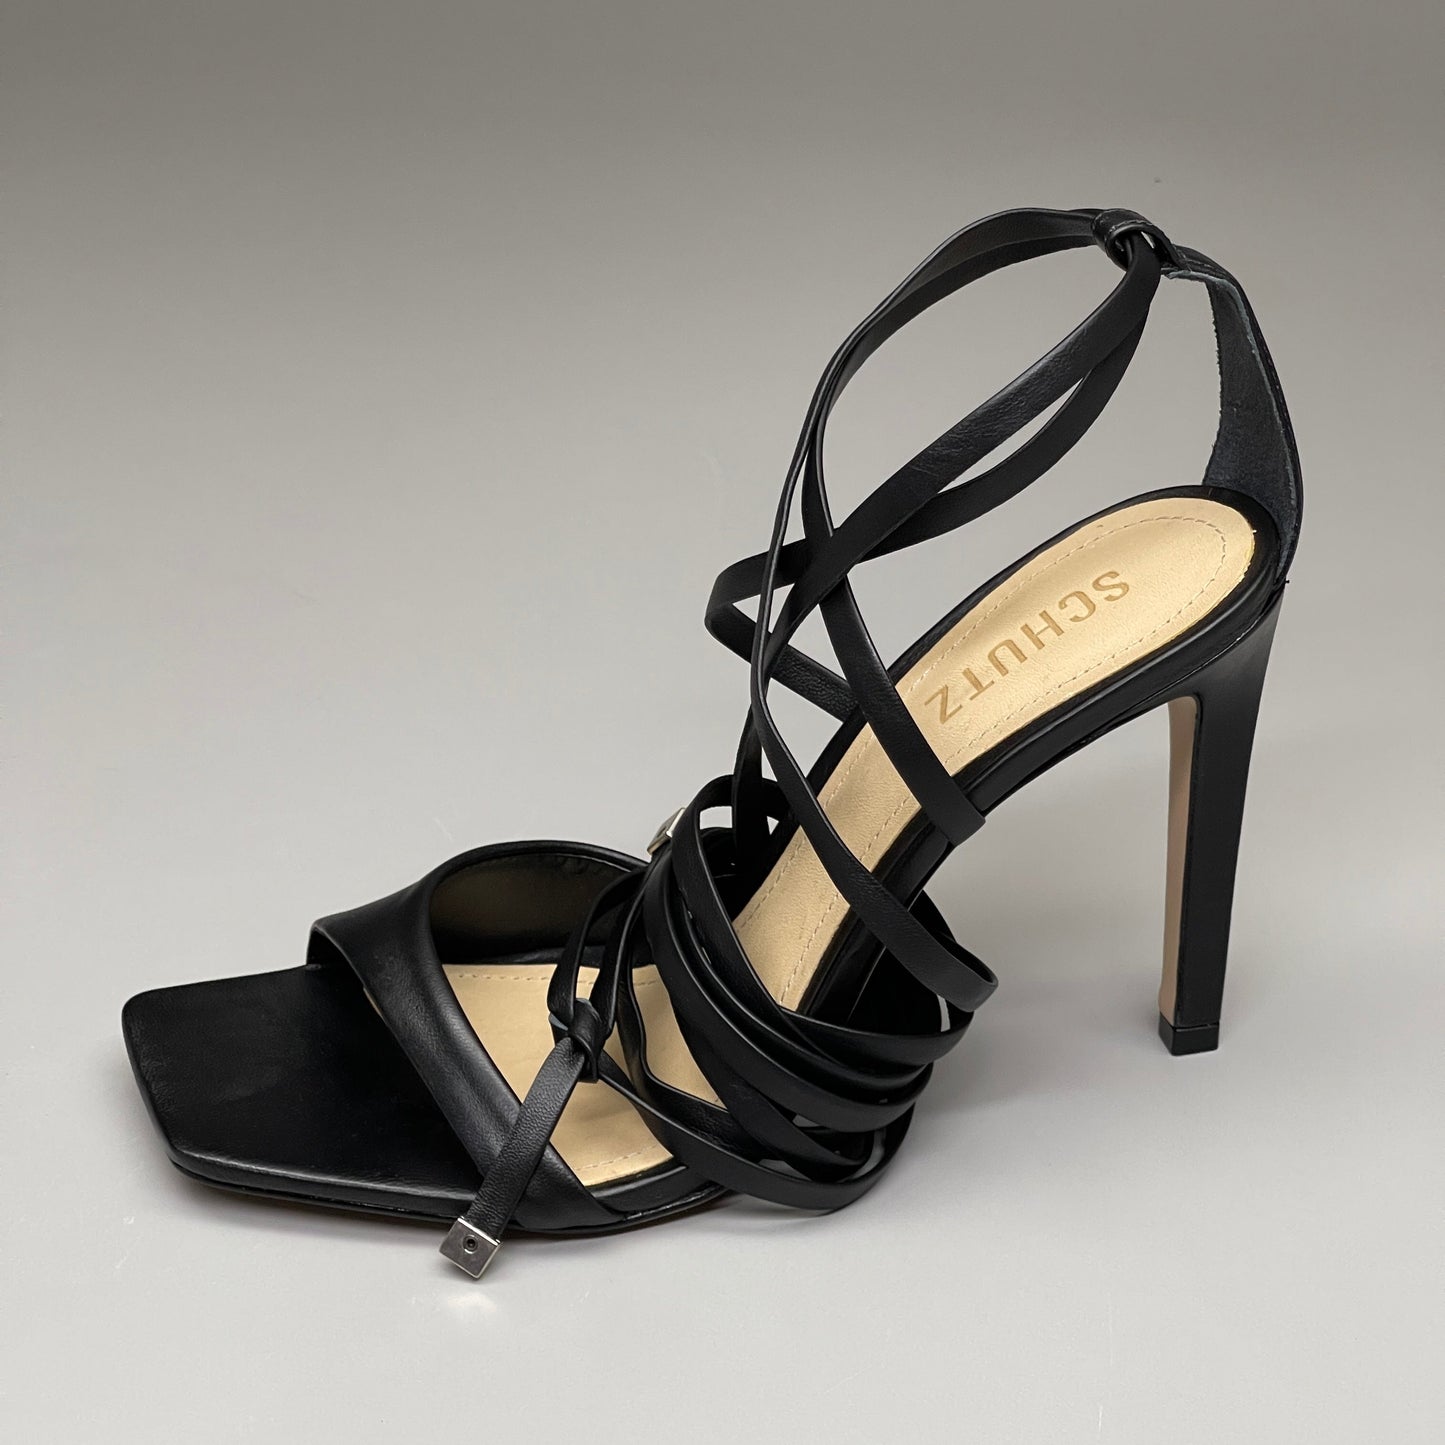 SCHUTZ Bryce Ankle Tie Women's Leather High Heel Strappy Sandal Black Sz 10B (New)